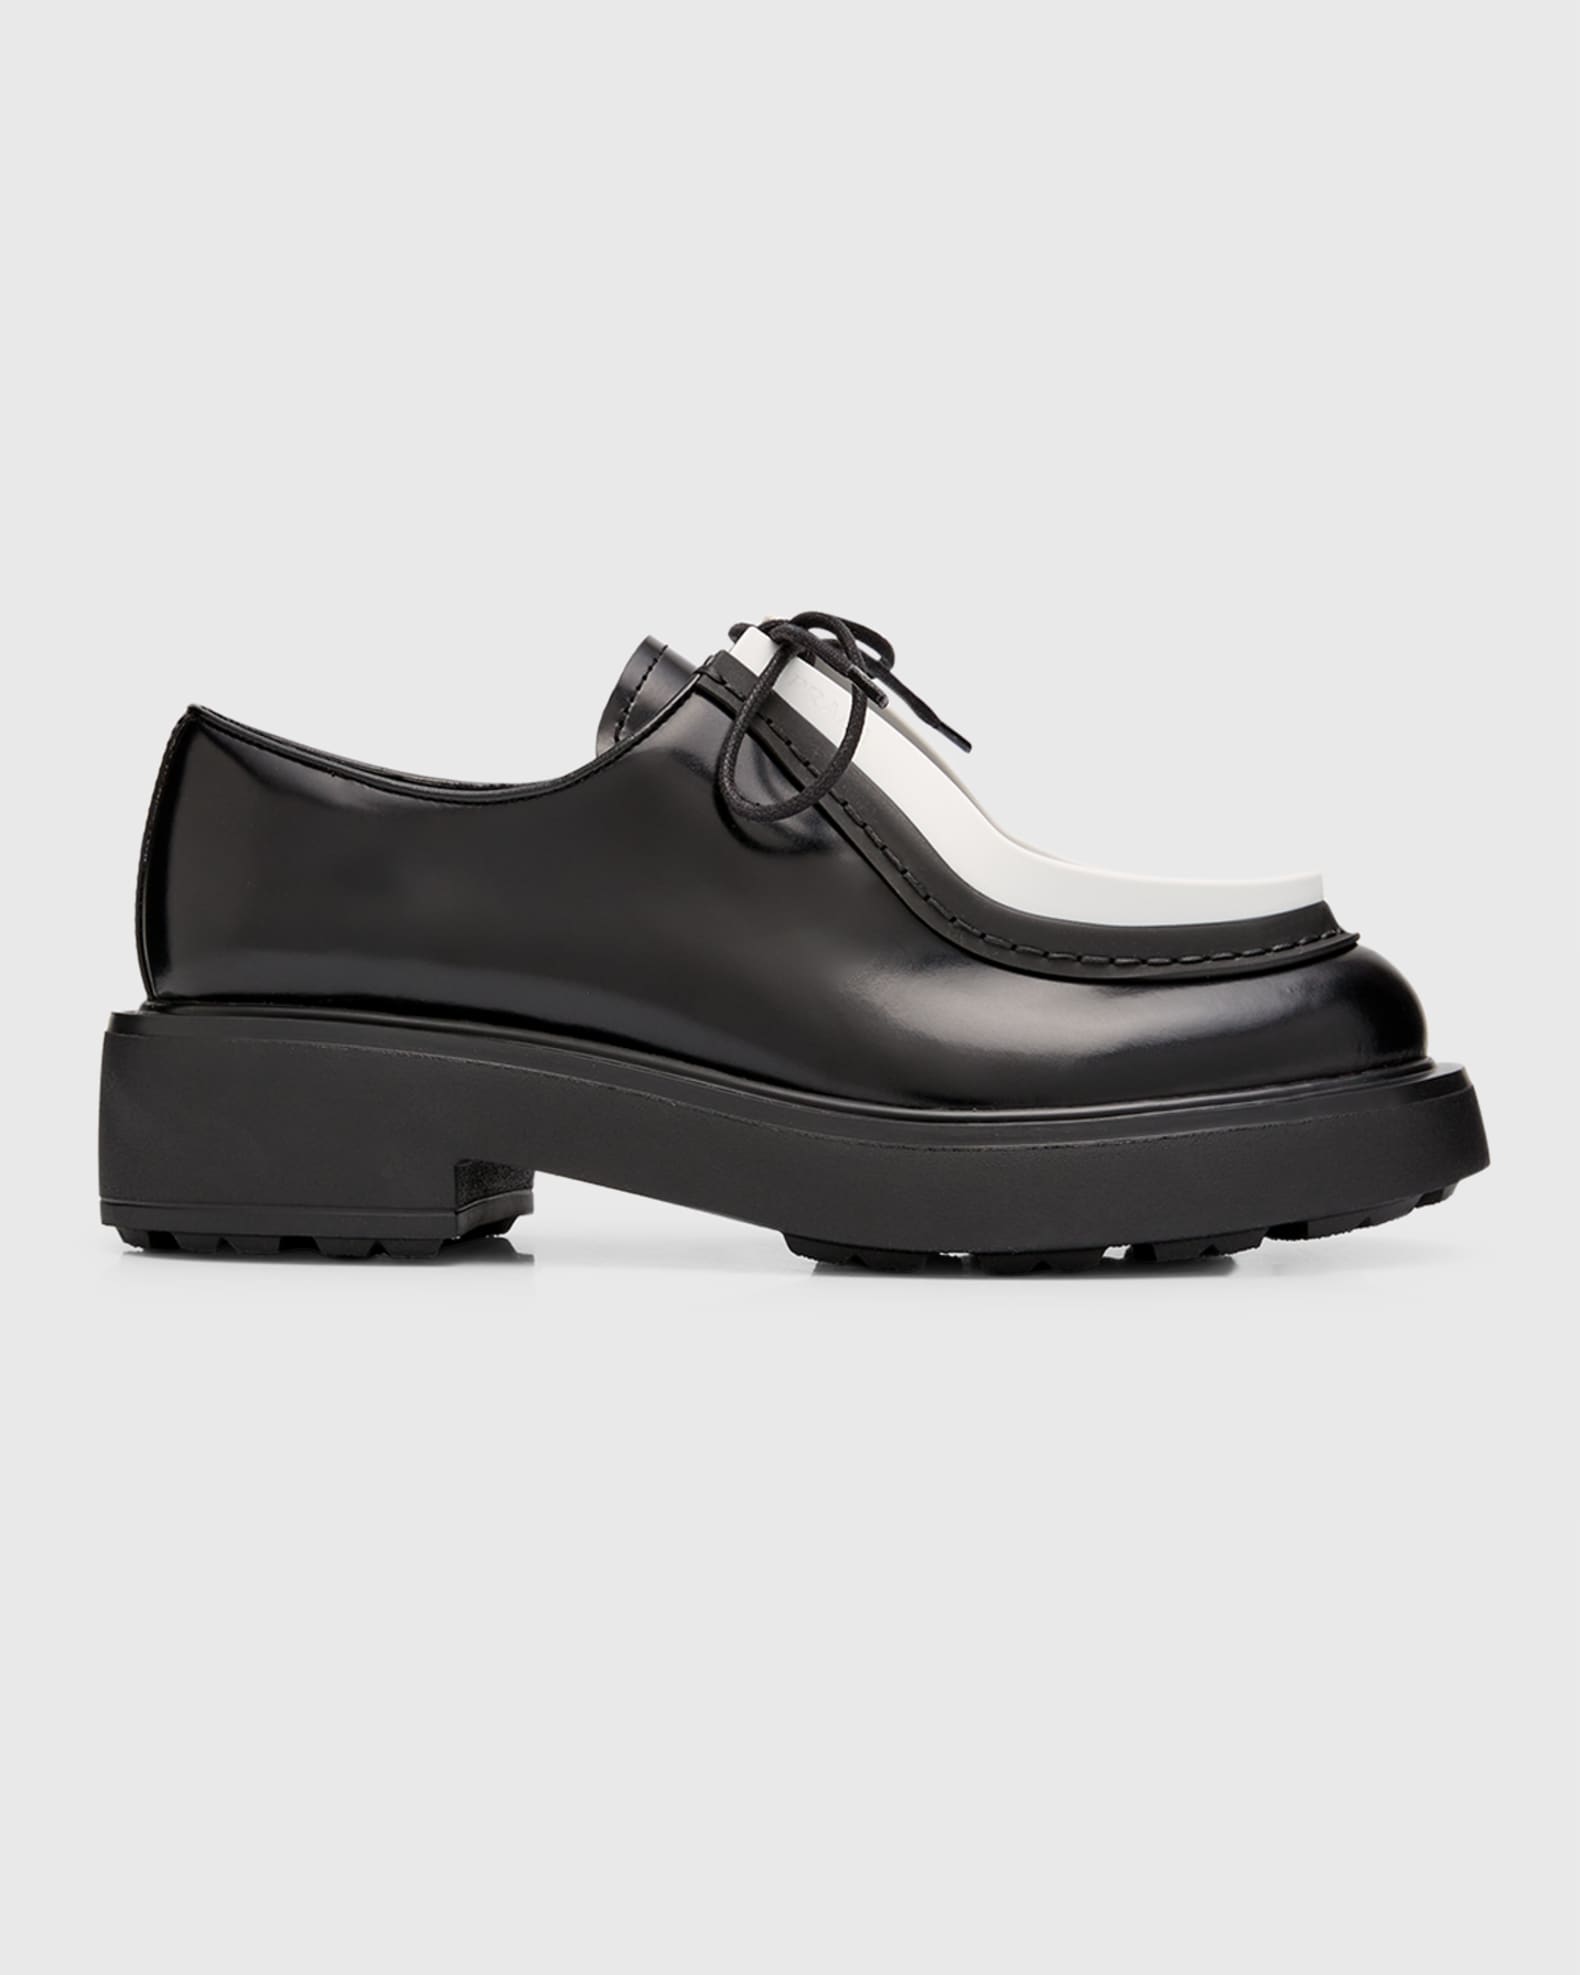 Prada Bicolor Leather Casual Loafers | Neiman Marcus